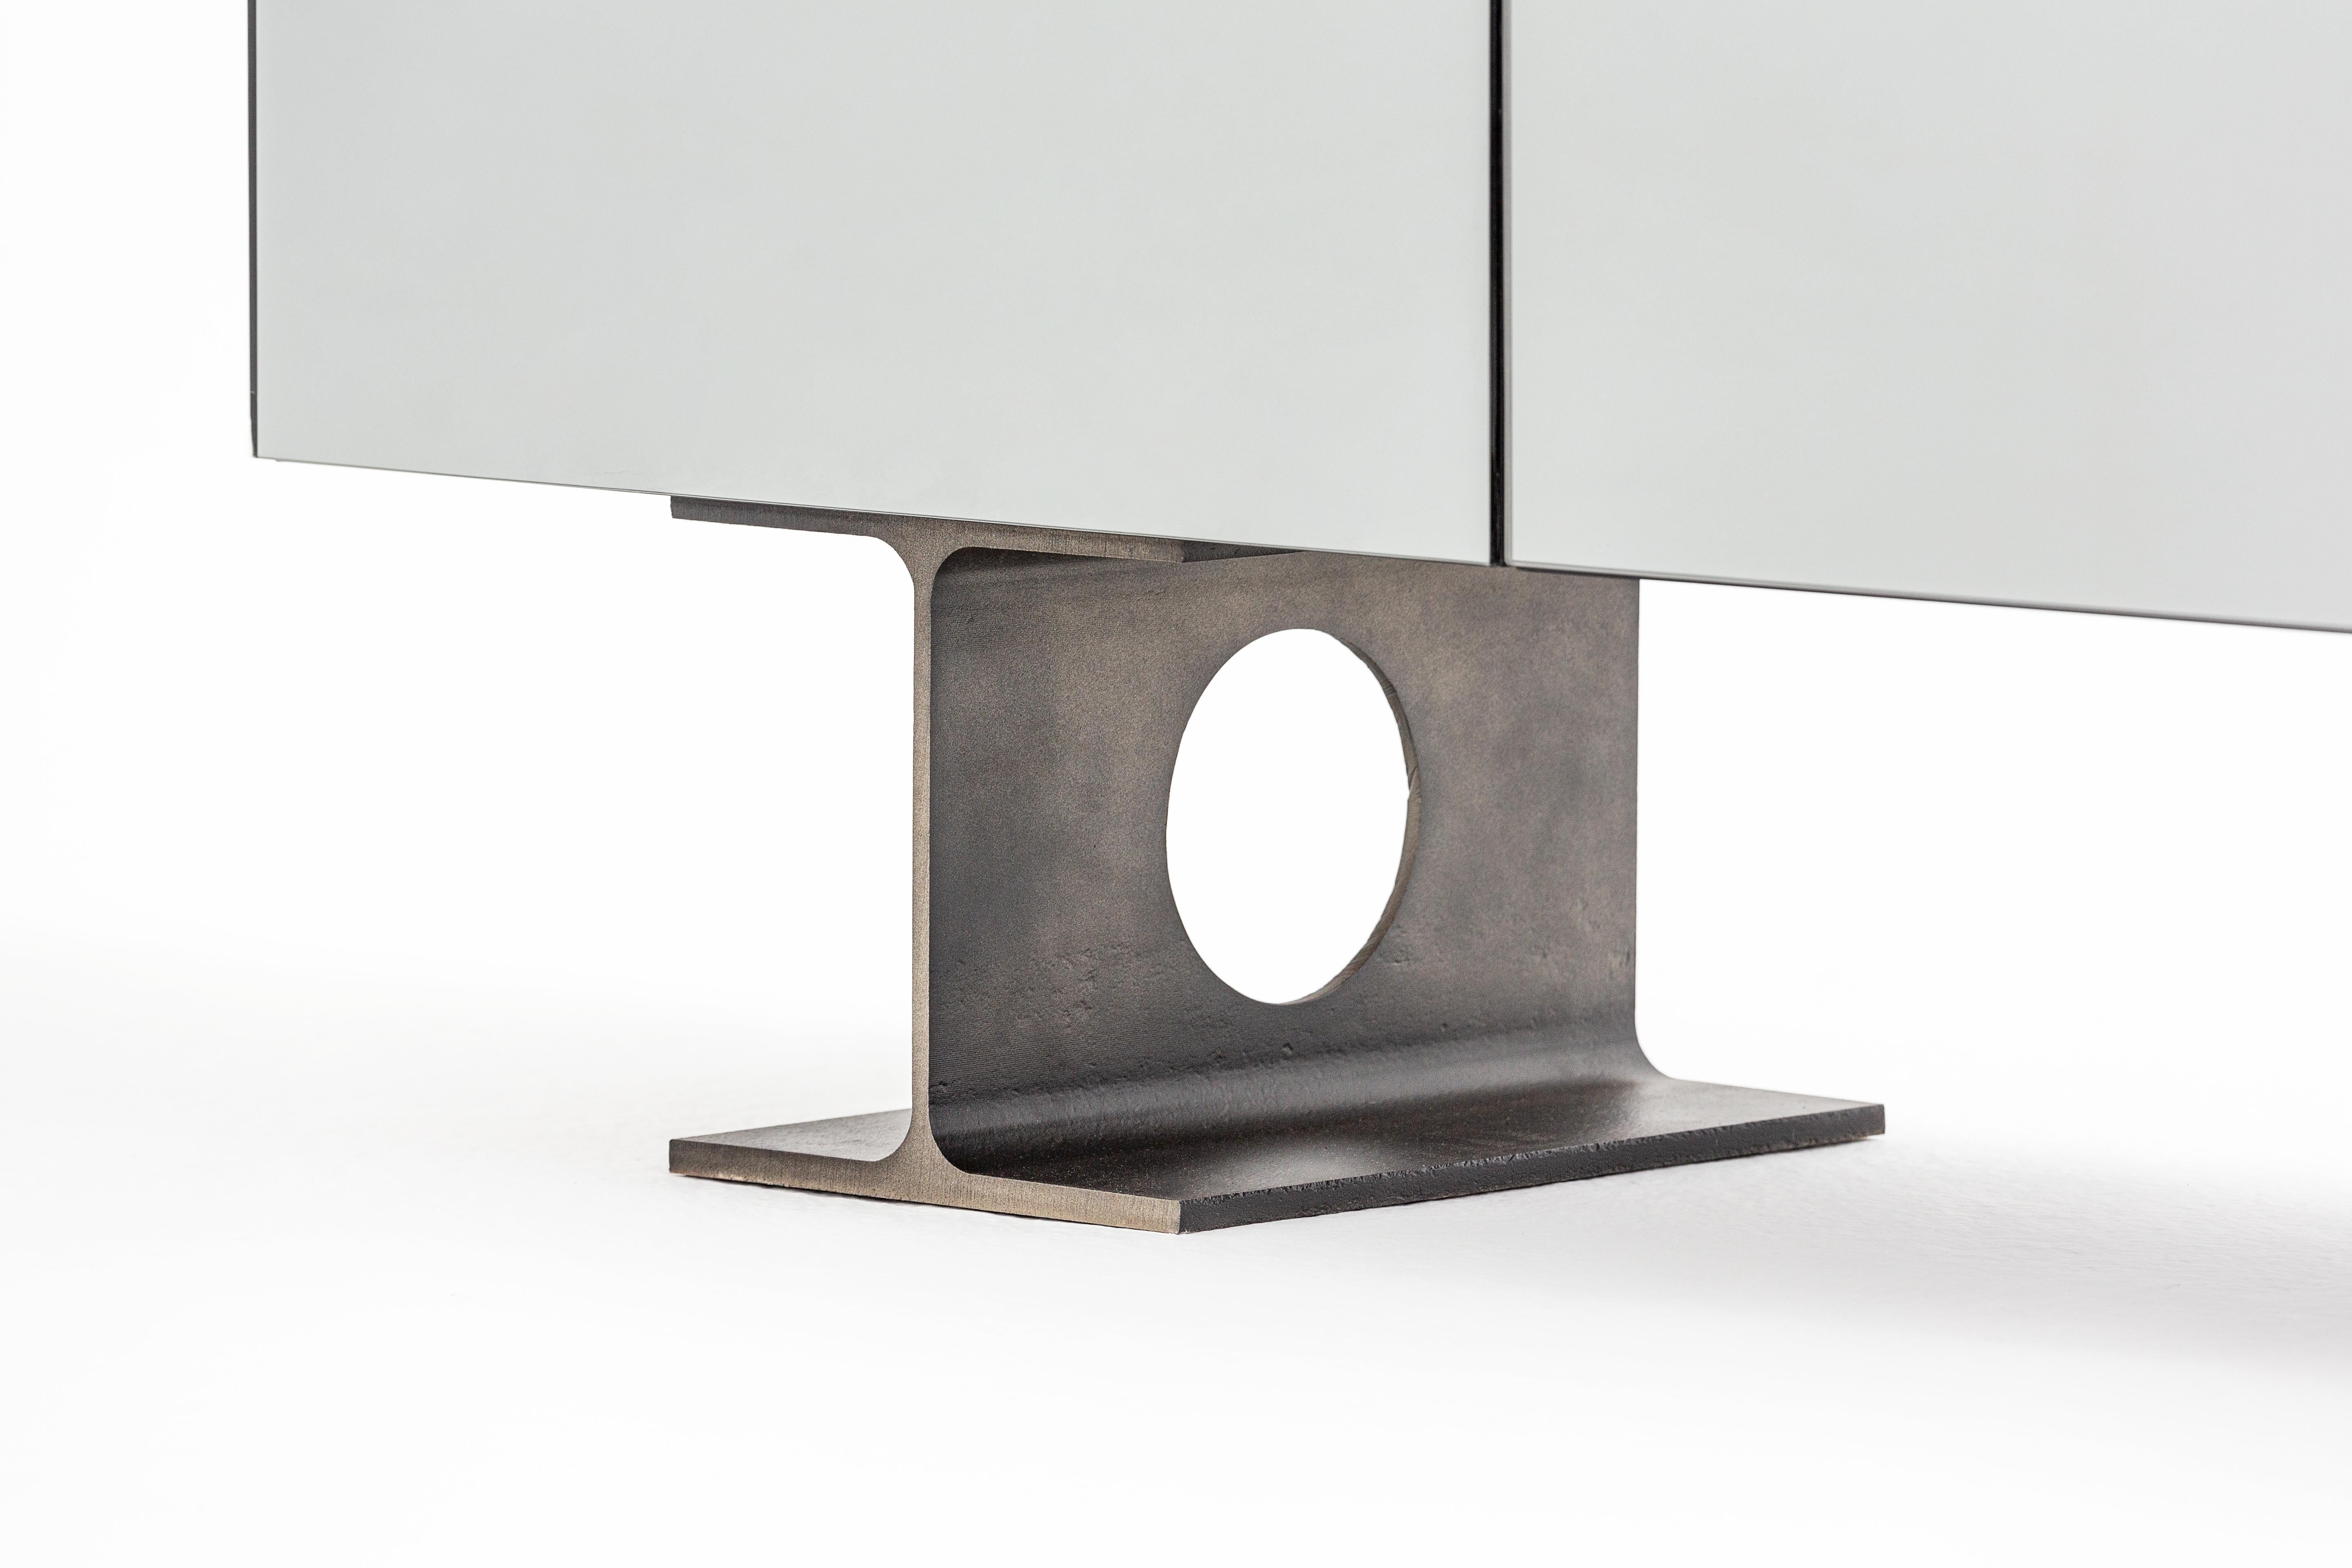 Contemporary Sculptural Brutalist Mirror Cabinet, Spinzi Milan, Industrial Collectible Design For Sale